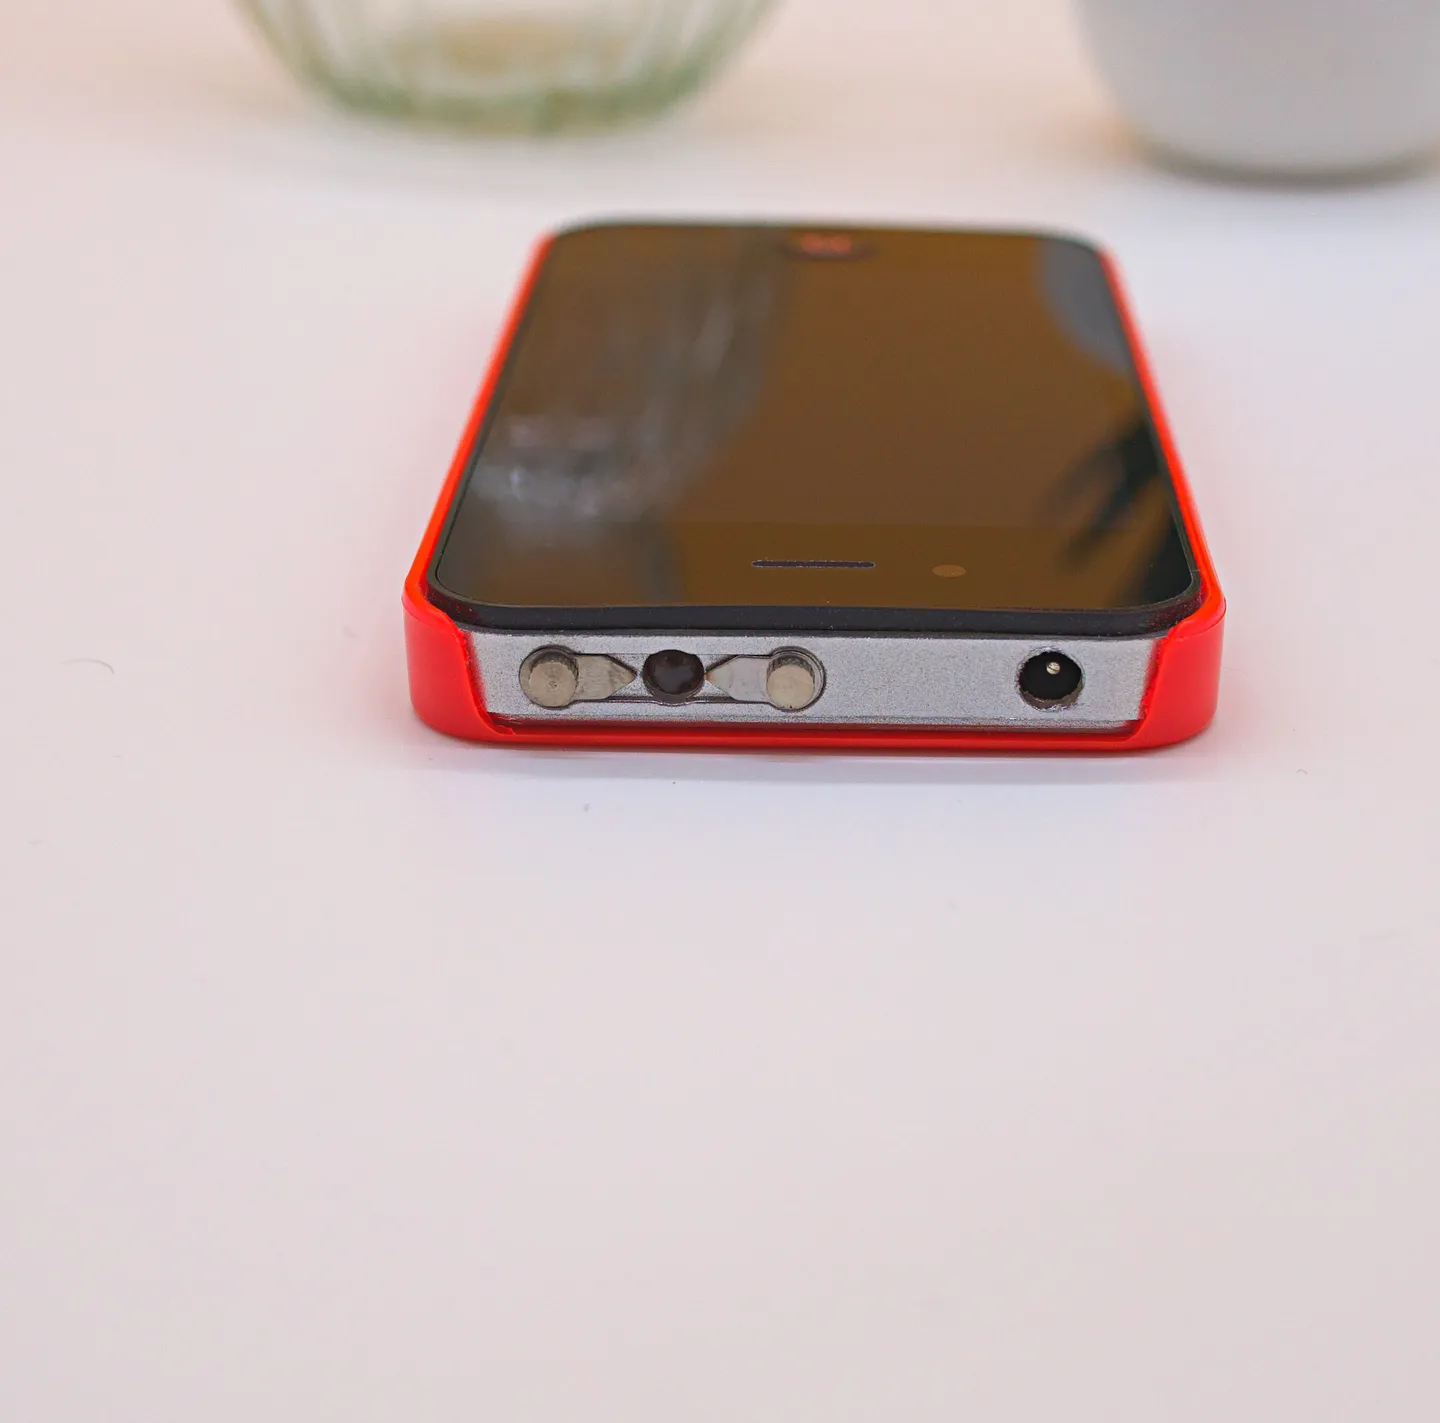 Shocker & Taser - Iphone Shocker Taser, 2 400 000 Voltios, discreción asegurada (Versión Roja)